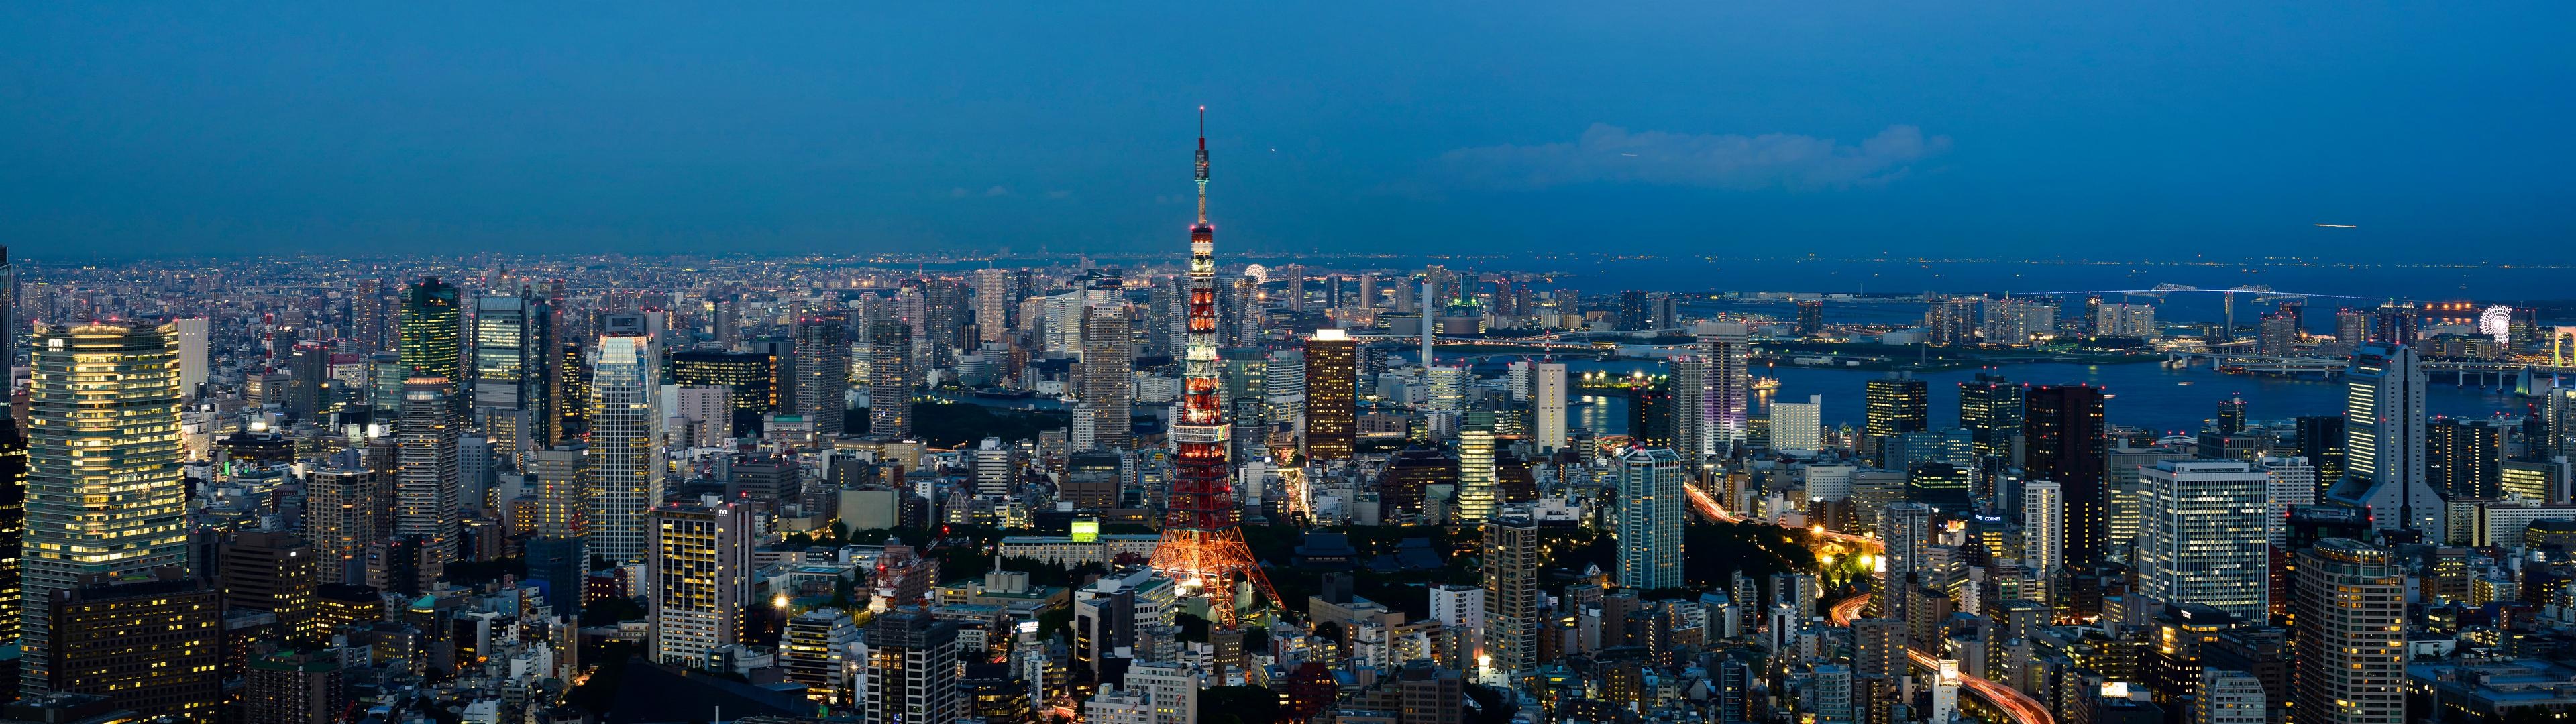 Tokyo Tower, Iconic landmark, Urban skyline, Japan's capital, 3840x1080 Dual Screen Desktop